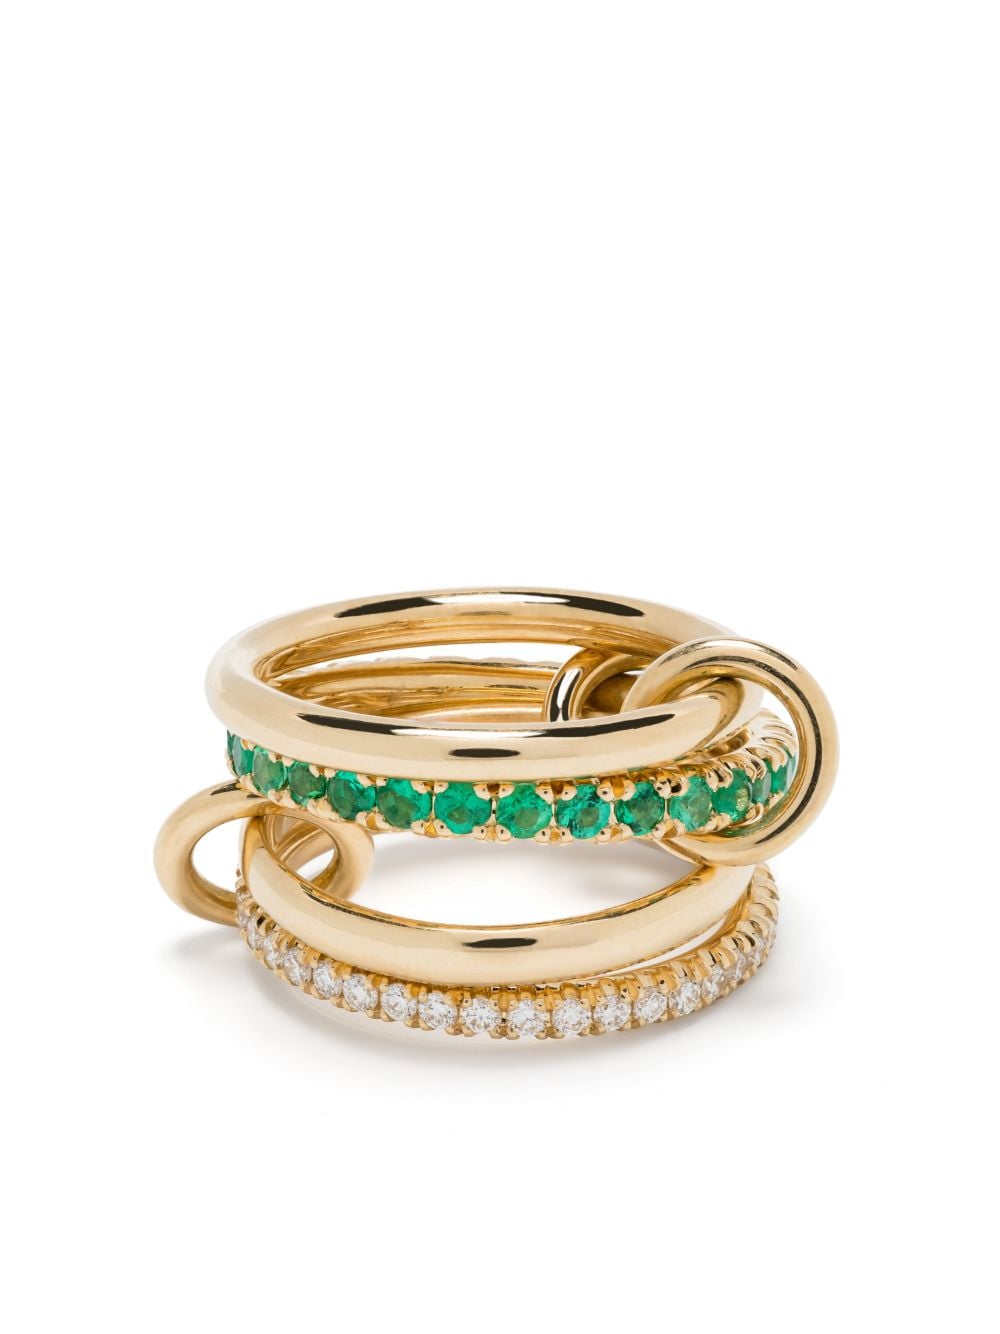 Spinelli Kilcollin 18k yellow gold Halley emerald and diamond ring von Spinelli Kilcollin